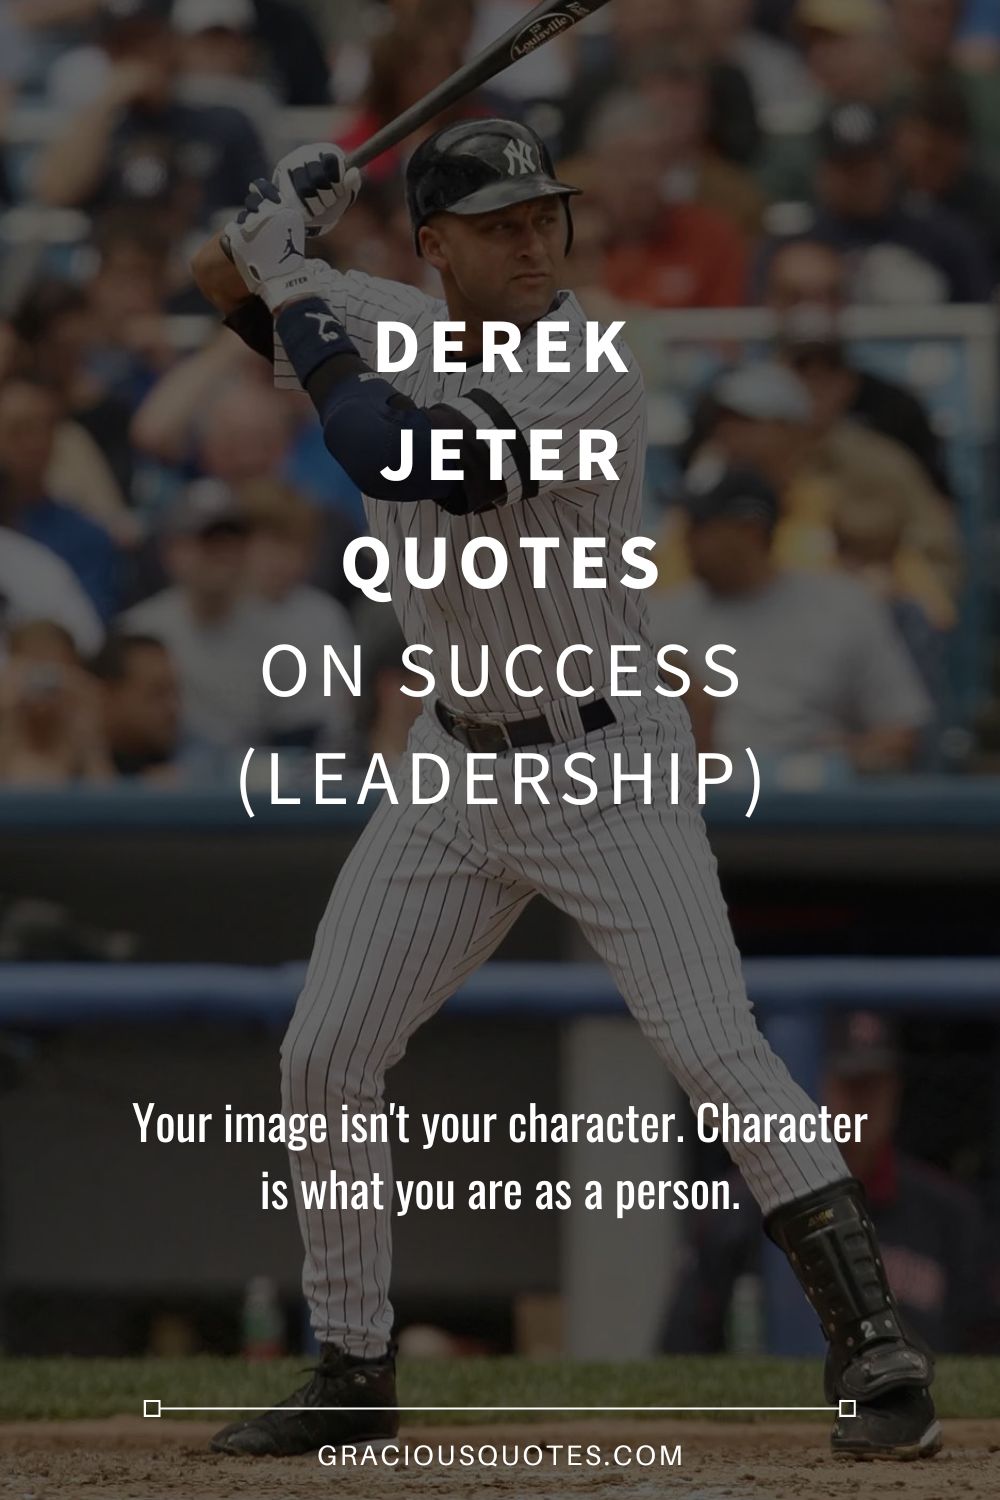 72 Derek Jeter Quotes on Success (LEADERSHIP)